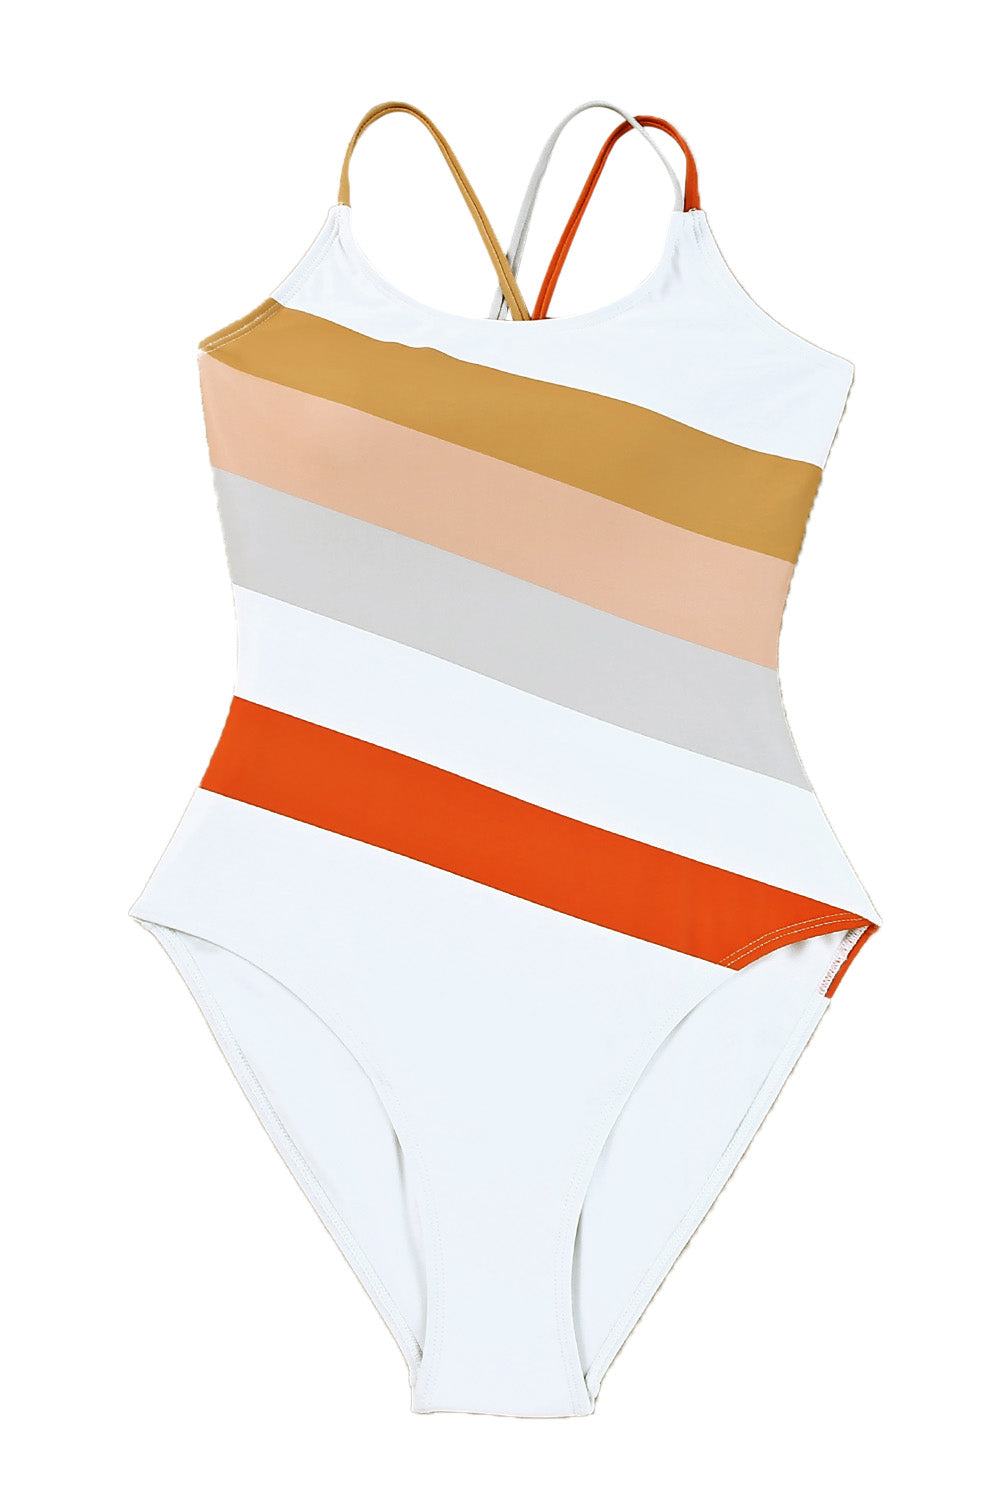 LC443420-22-S, LC443420-22-M, LC443420-22-L, LC443420-22-XL, LC443420-22-2XL, Multicolor Women's One Piece Swimsuit Striped Criss Cross Backless Beach Swimwear Bathing Suits